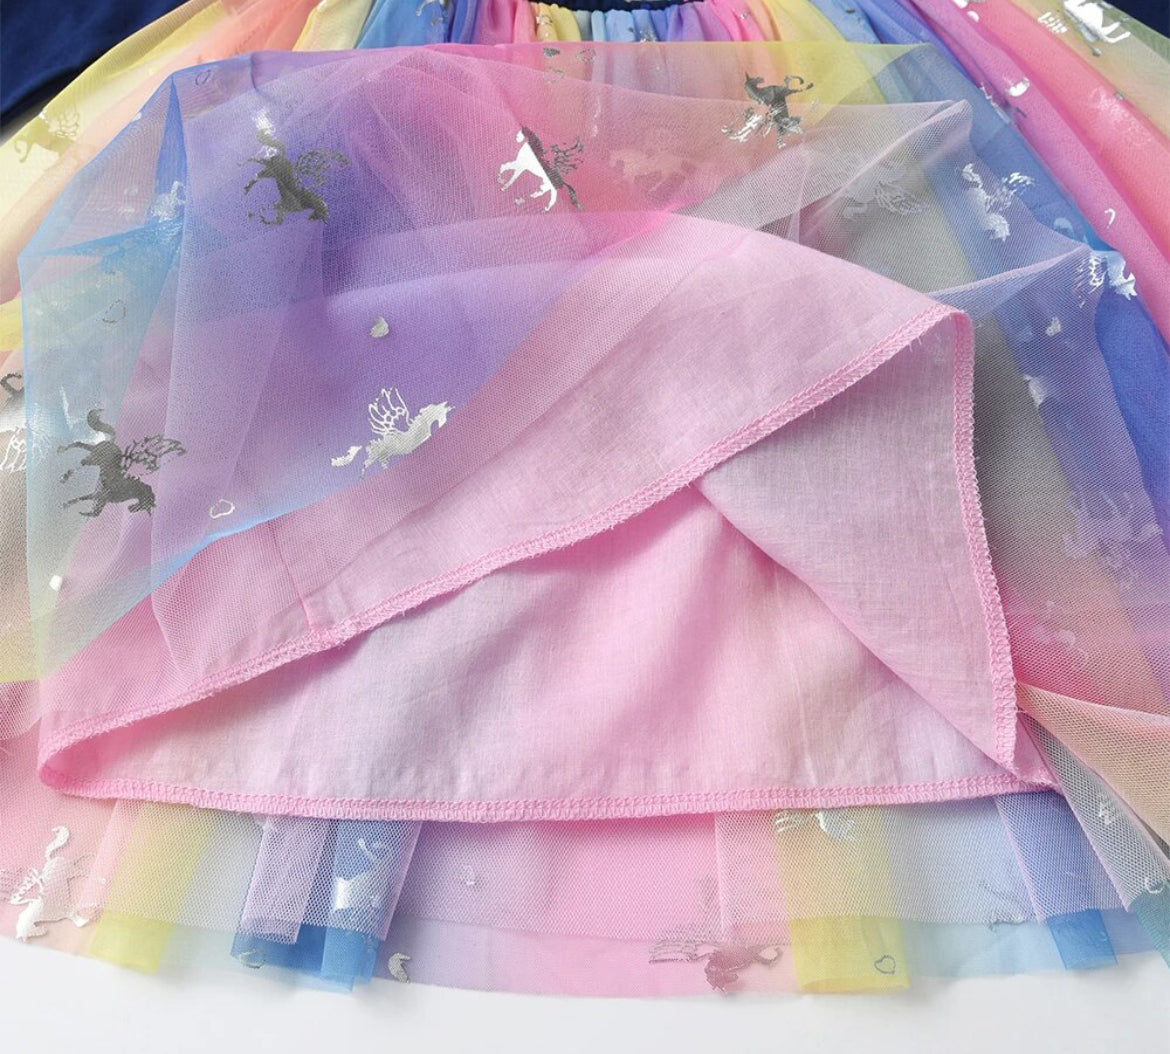 New Unicorn Girls Dress, Cotton Candy Colors Mesh Dress, Modish ✨ Glam Collection